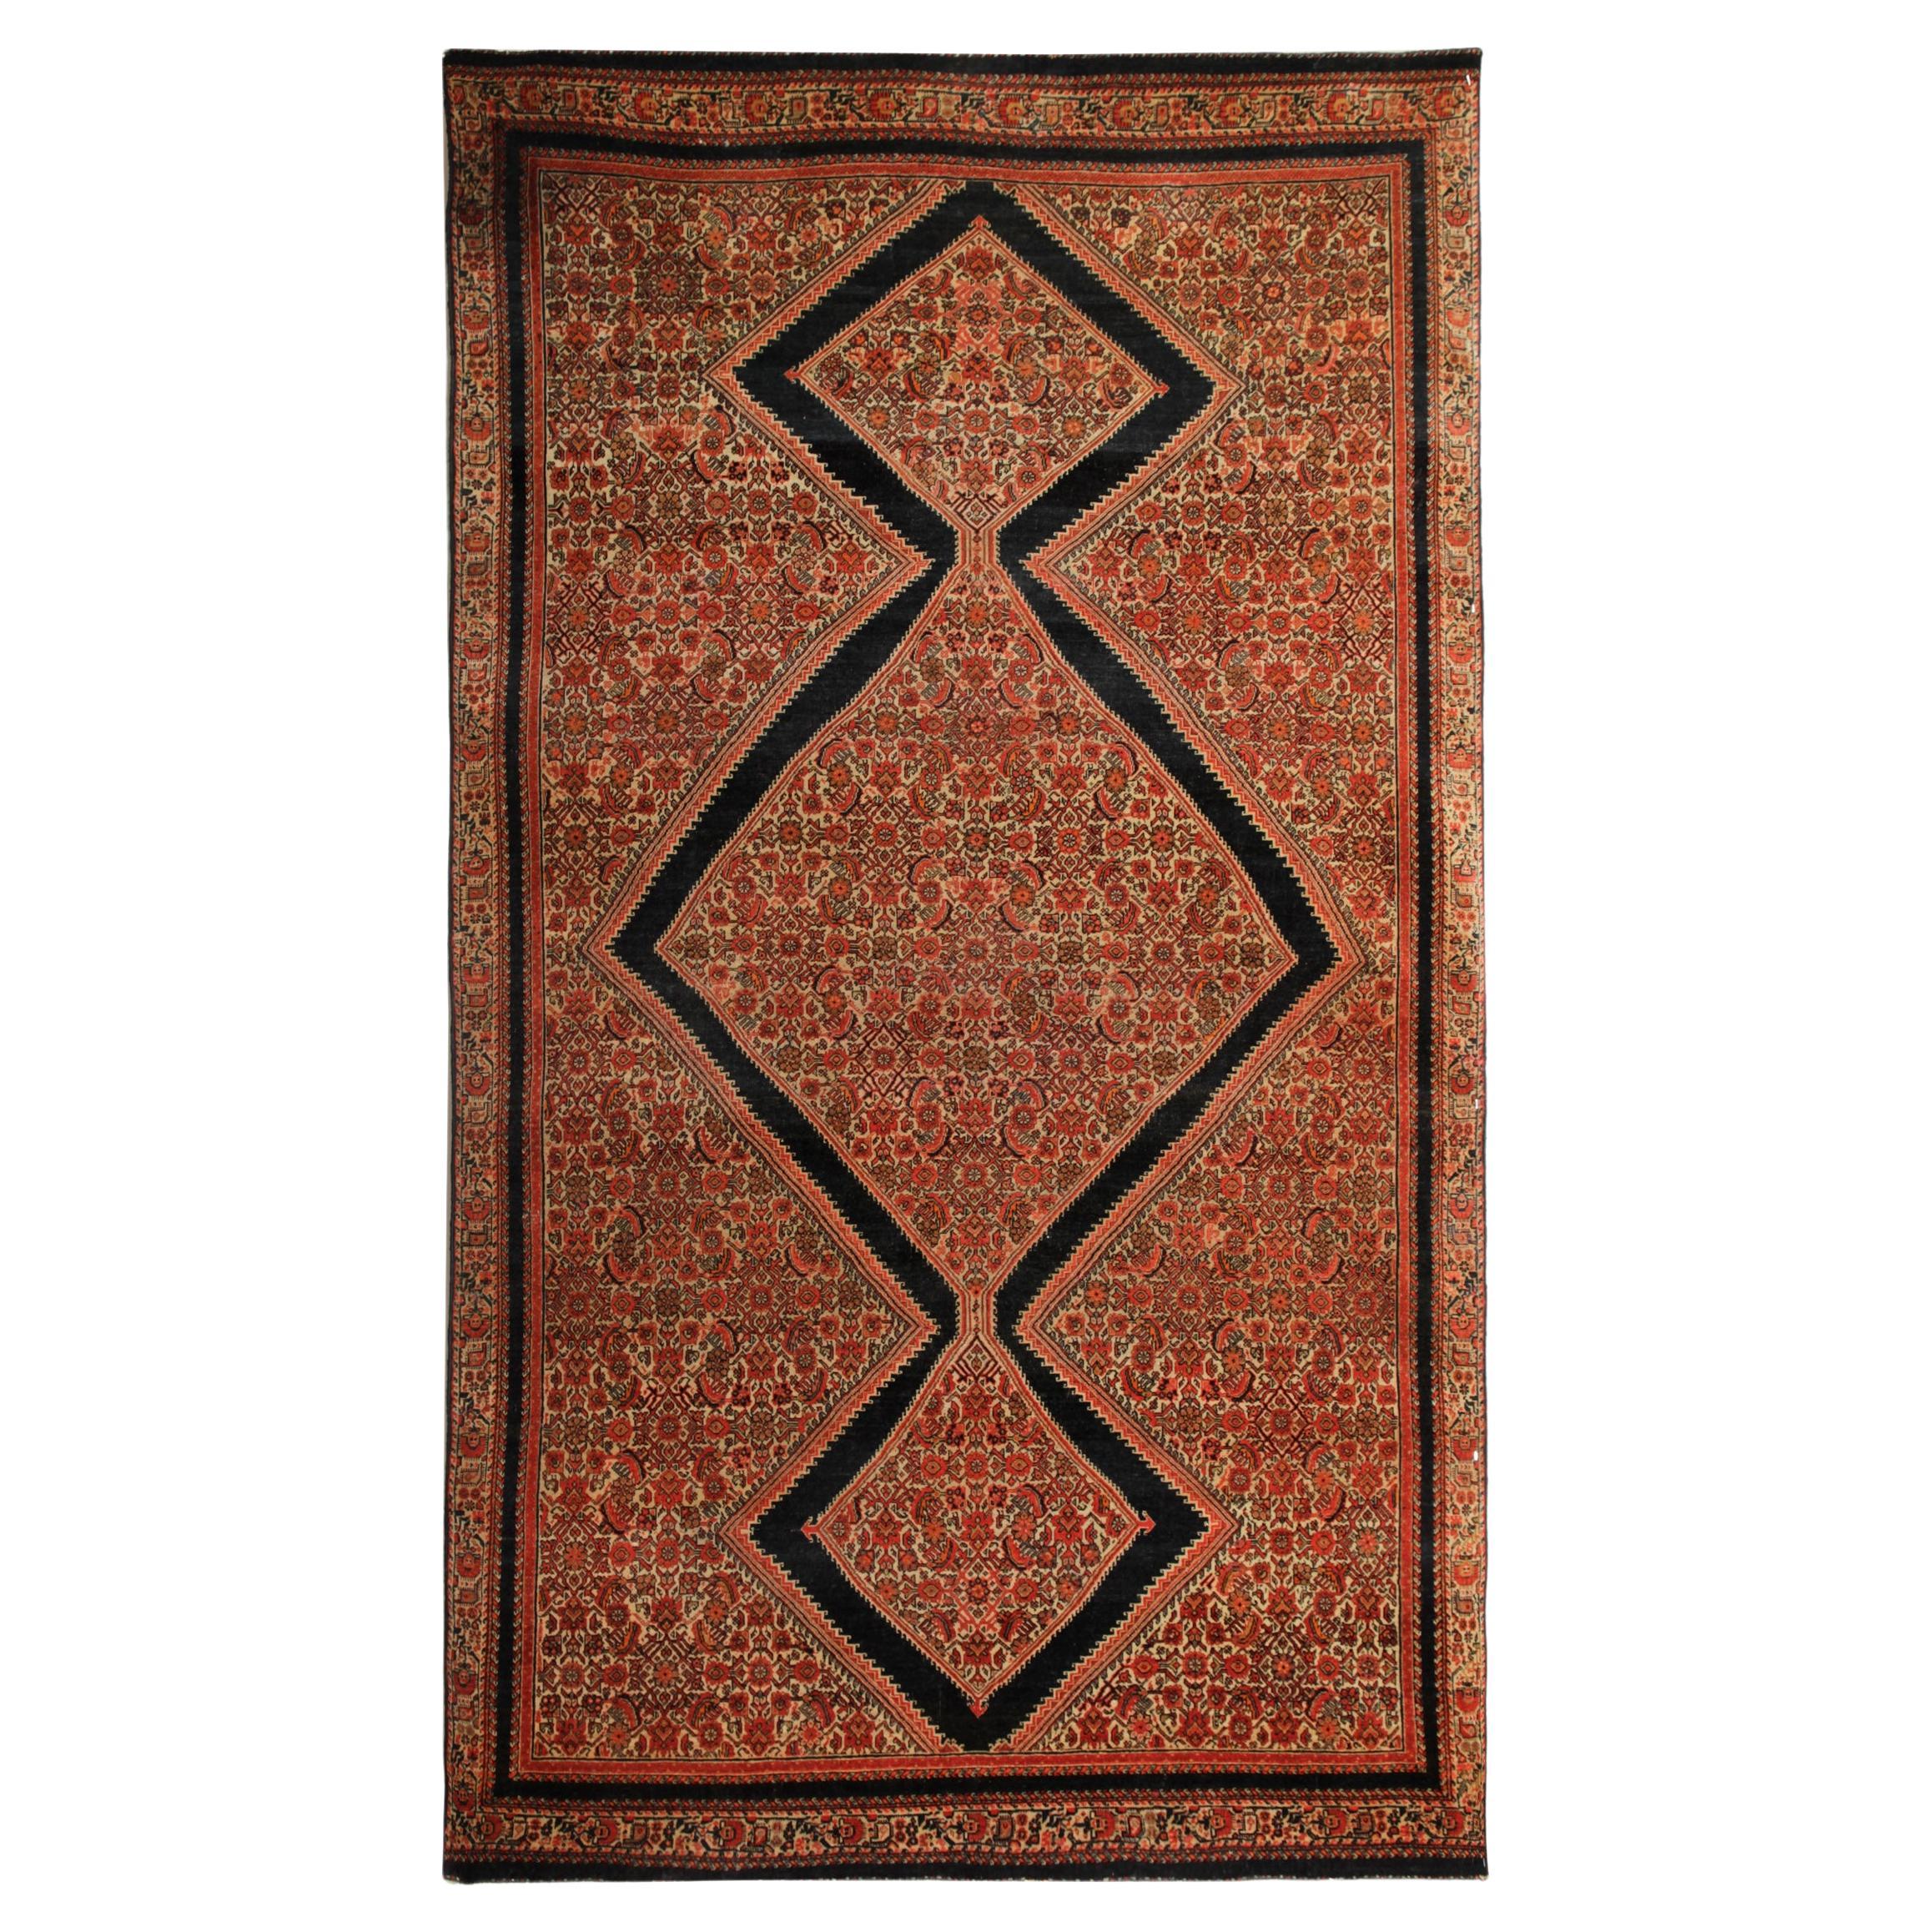 Antique Handwoven Oriental Wool Area Rug Rust Geometric Carpet For Sale